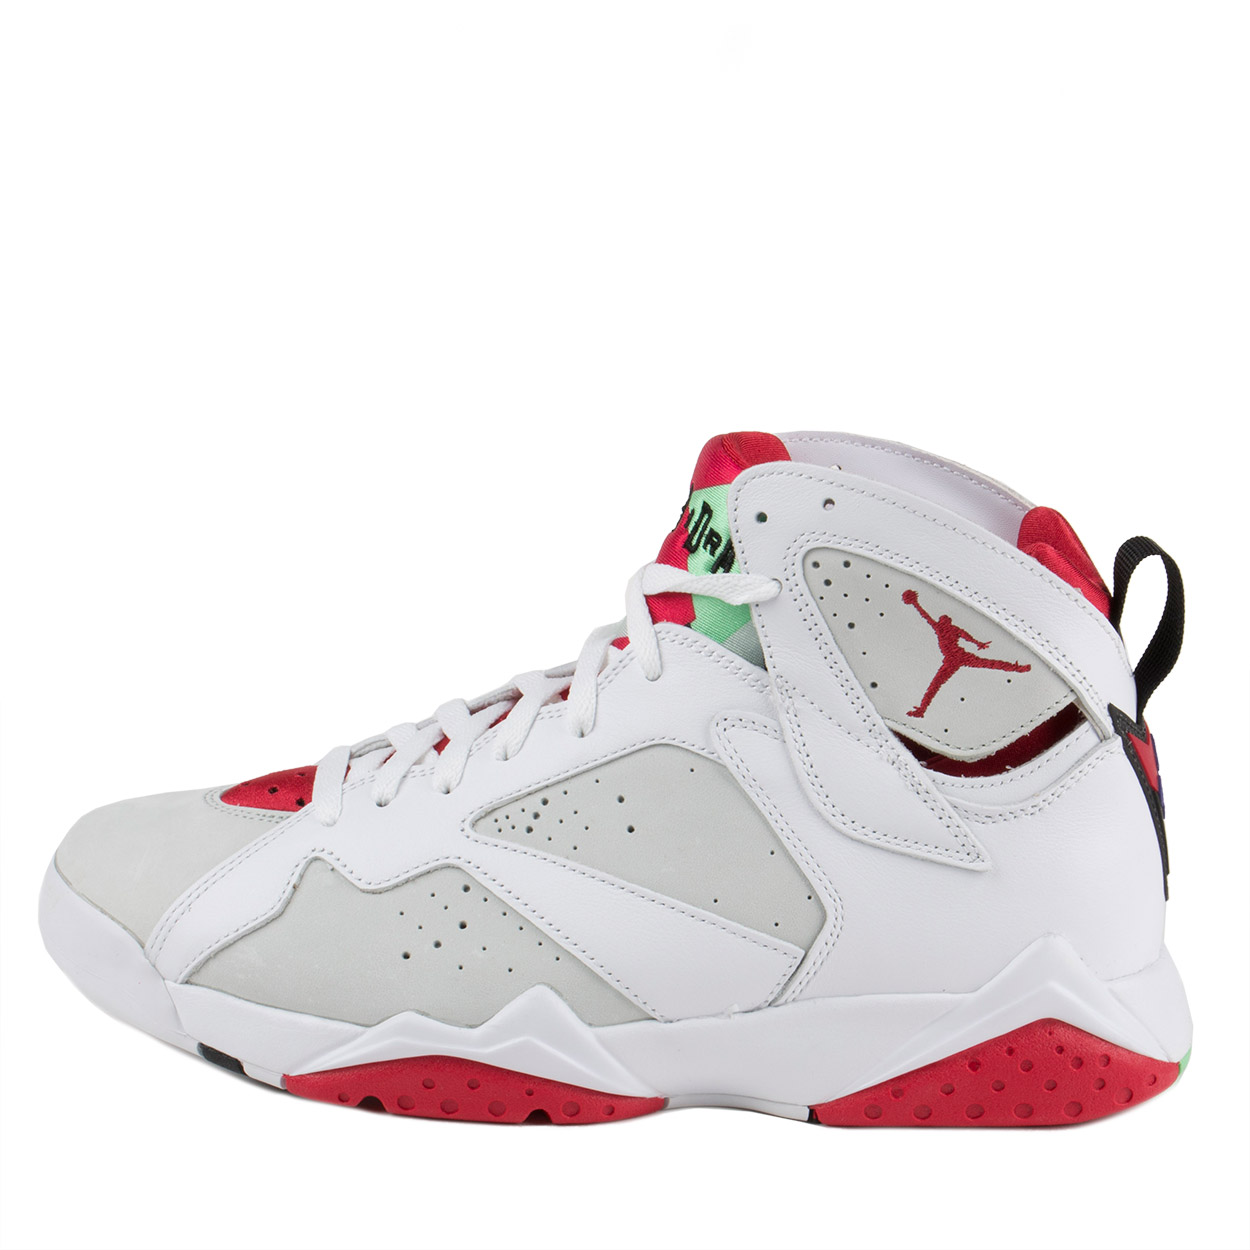 Nike Mens Air Jordan 7 Retro "Hare" White/True Red-Light Silver 304775-125 - image 2 of 5